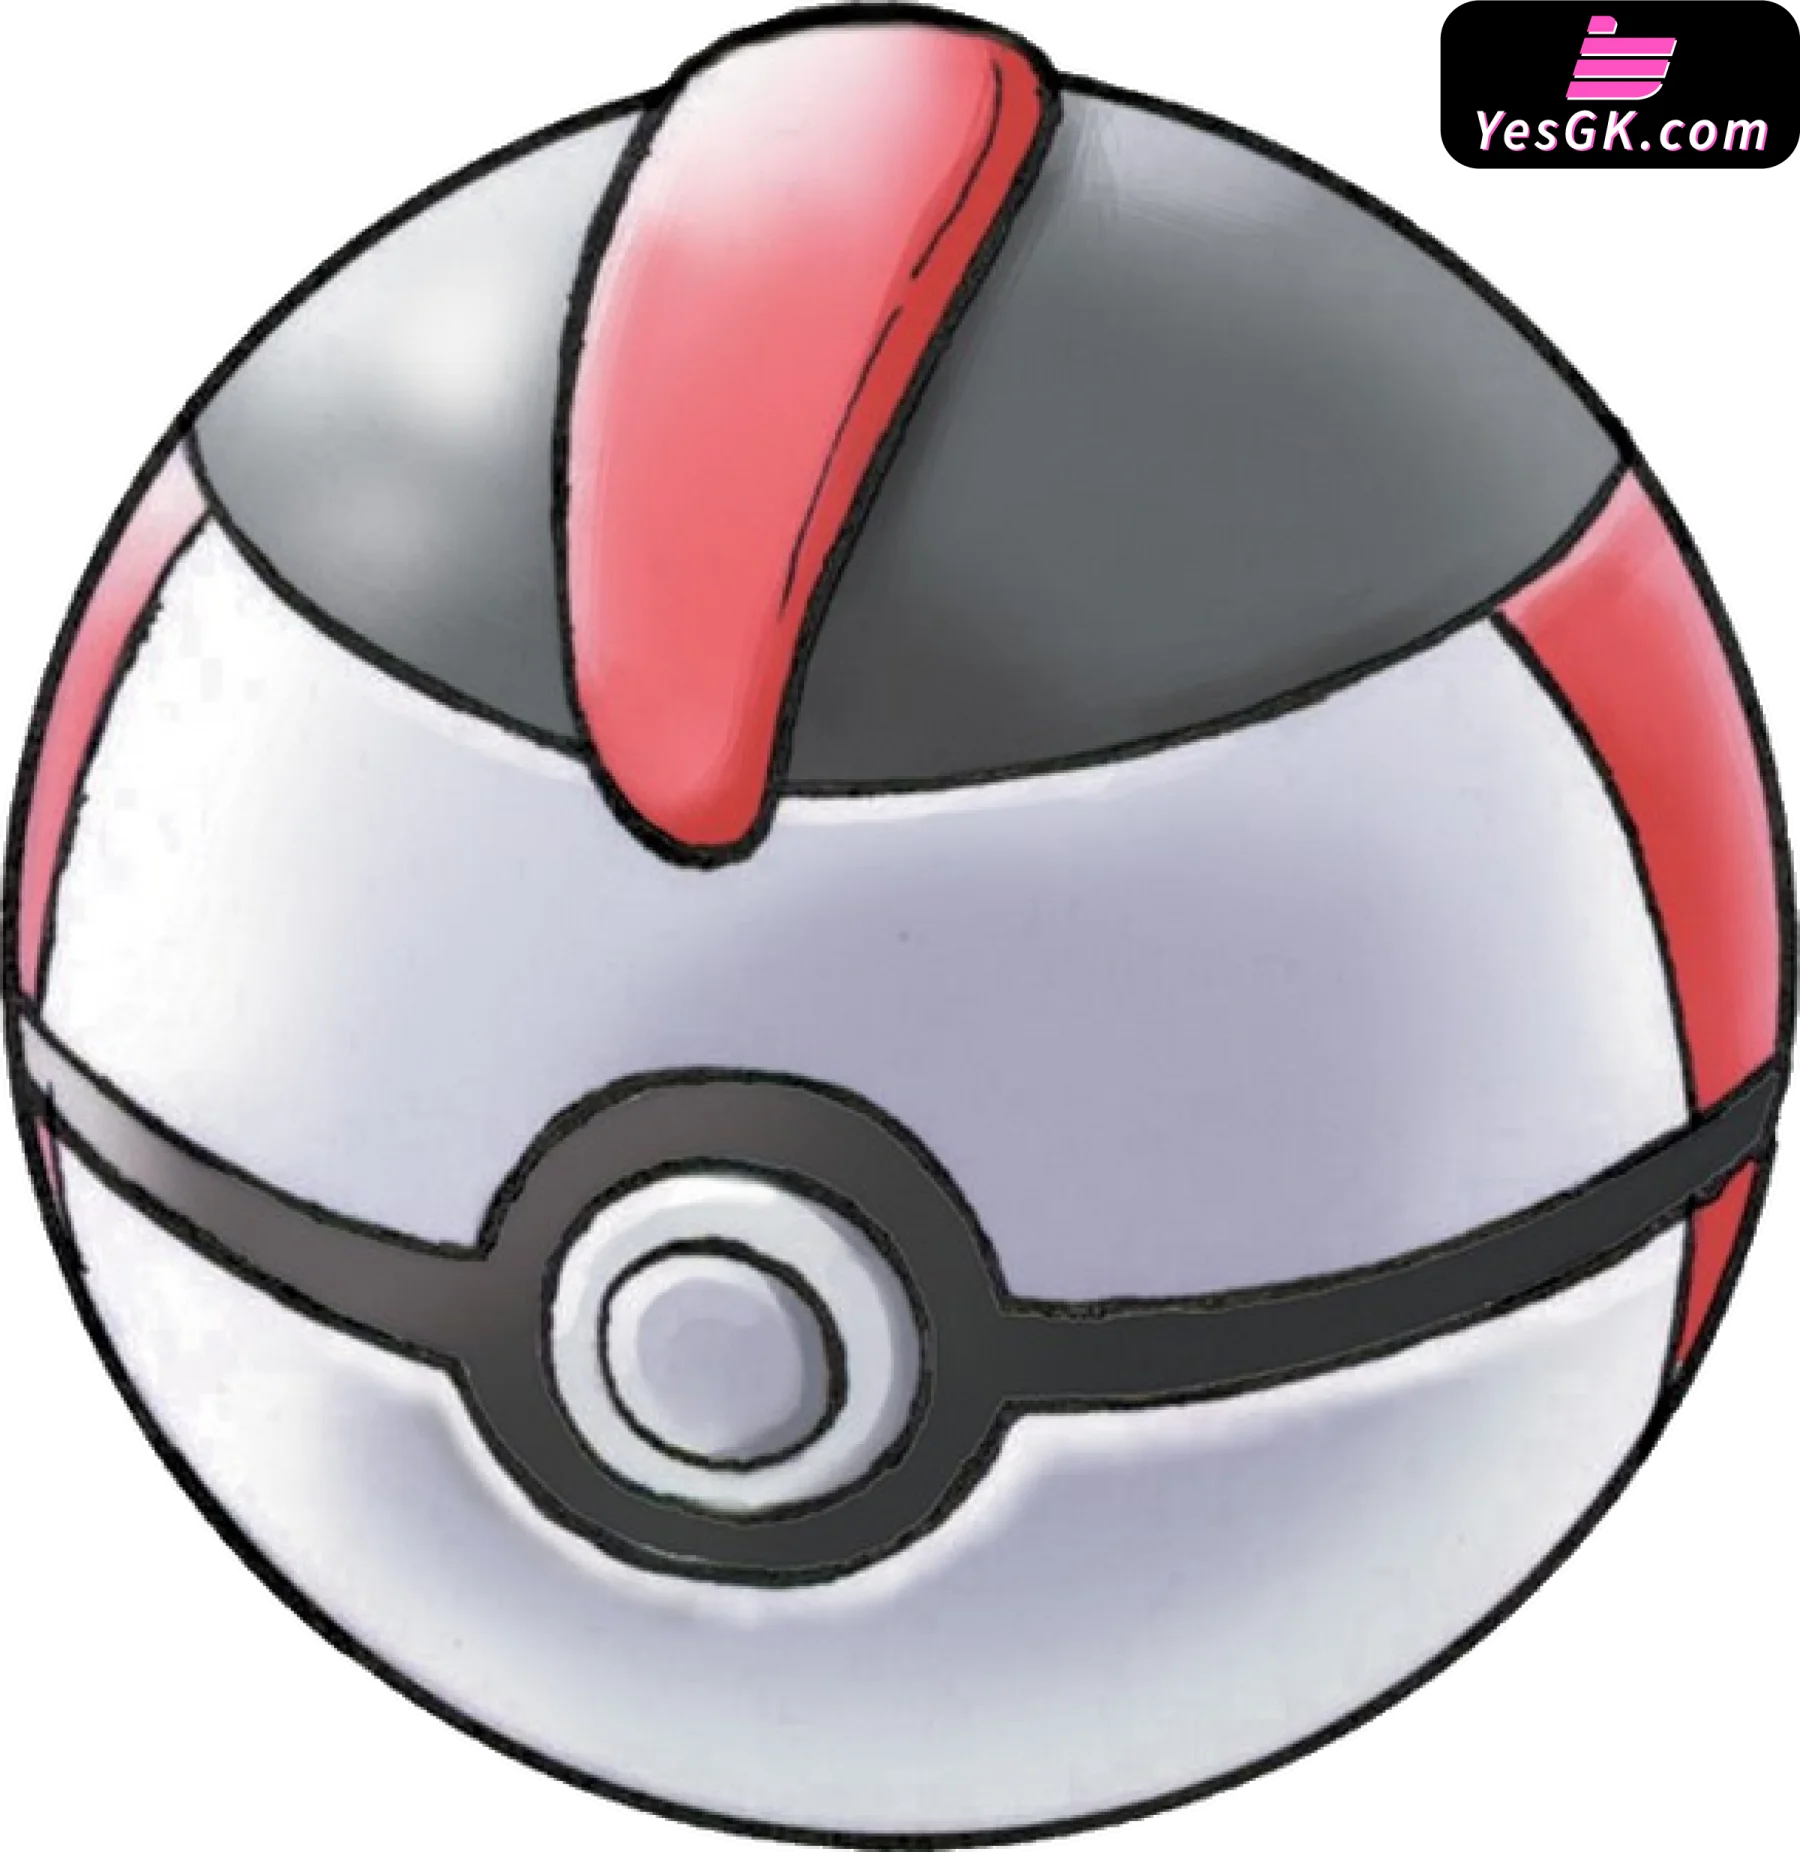 Pokémon Red and Blue Poké Ball, pokeball, image File Formats, pokemon,  mudkip png